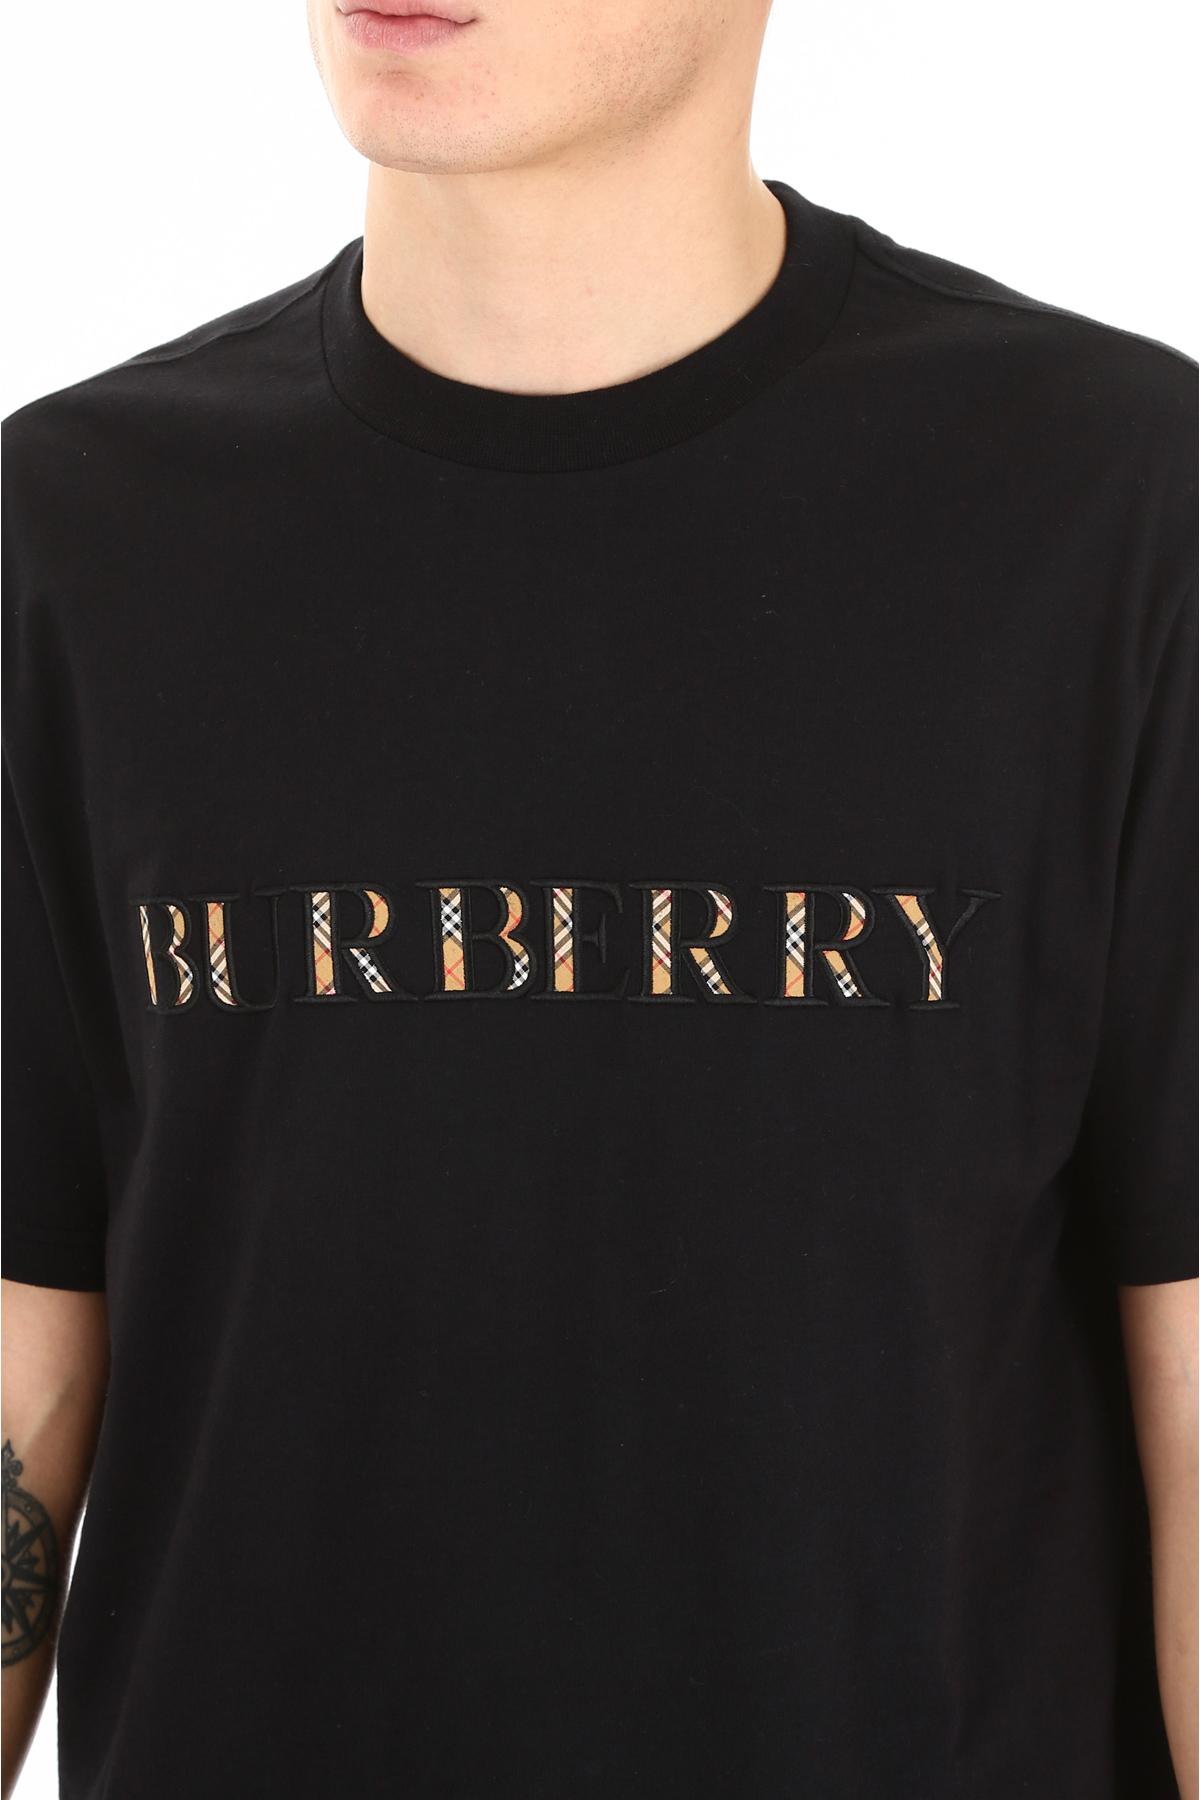 Arriba 89+ imagen burberry men's black t shirt - Abzlocal.mx